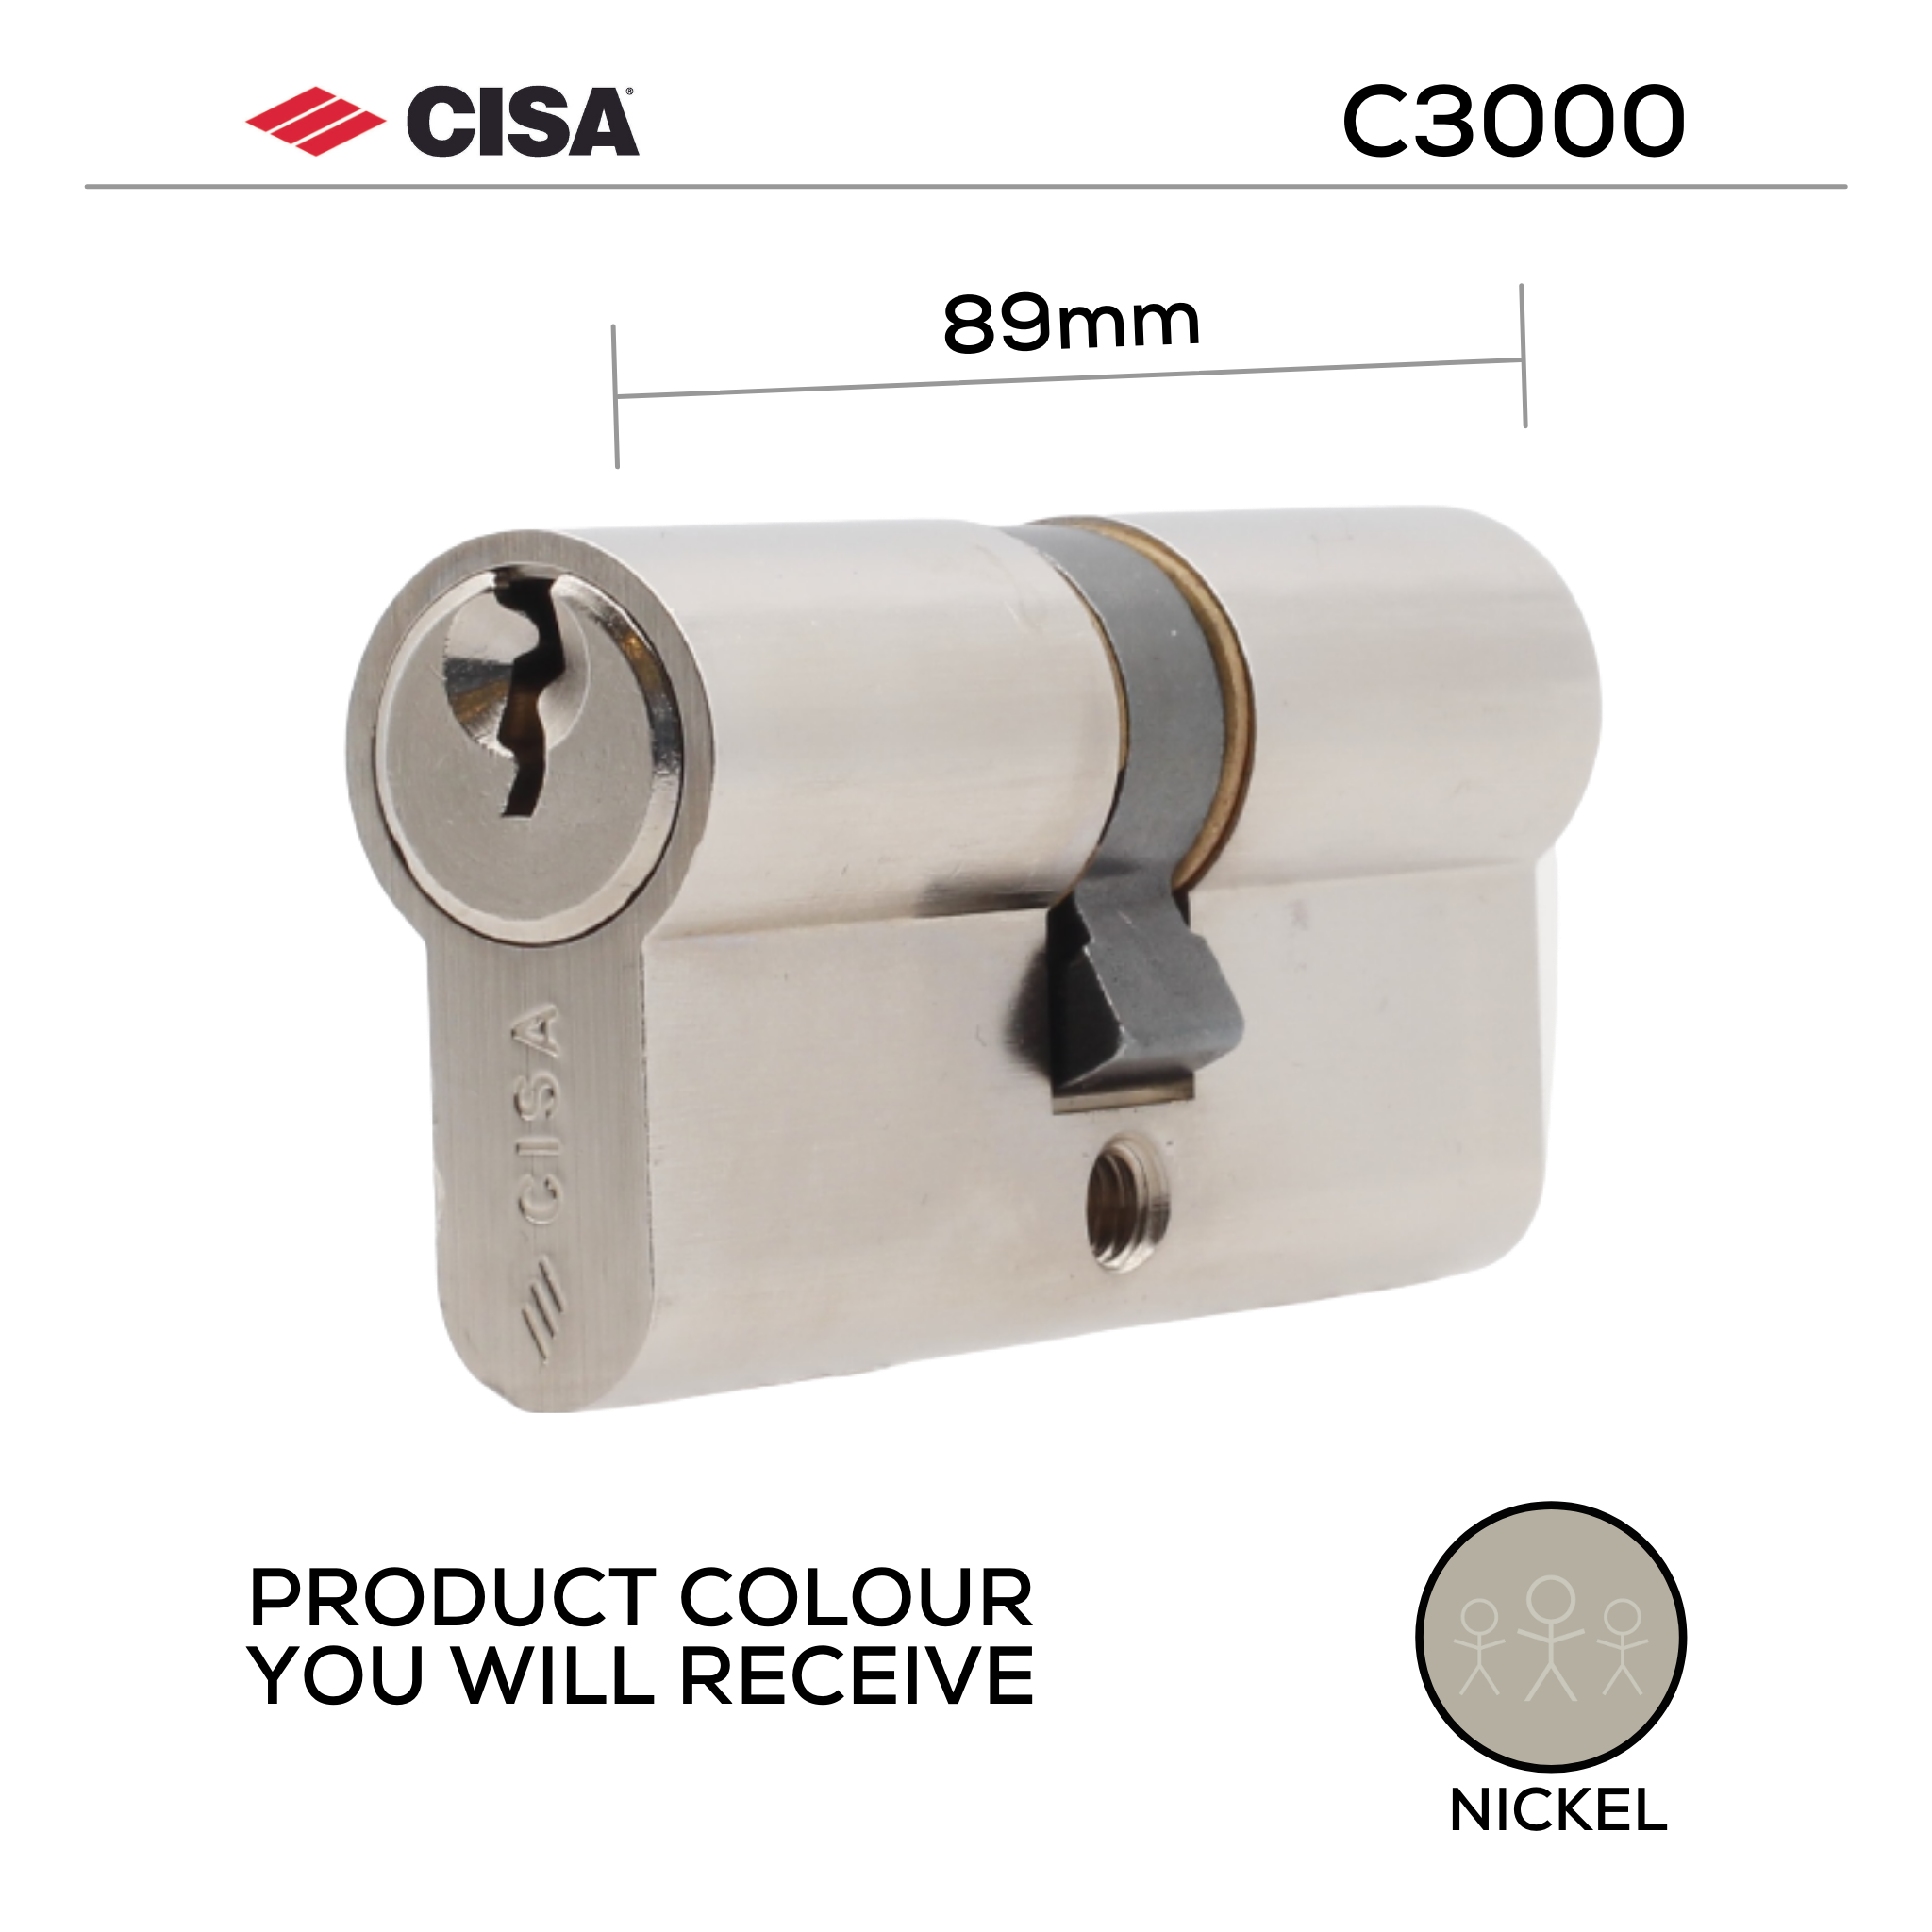 0N310-29-12-KD, 89mm - 44.5/44.5, Double Cylinder, C3000, Key to Key, Keyed to Differ (Standard), 3 Keys, 6 Pin, Nickel, CISA